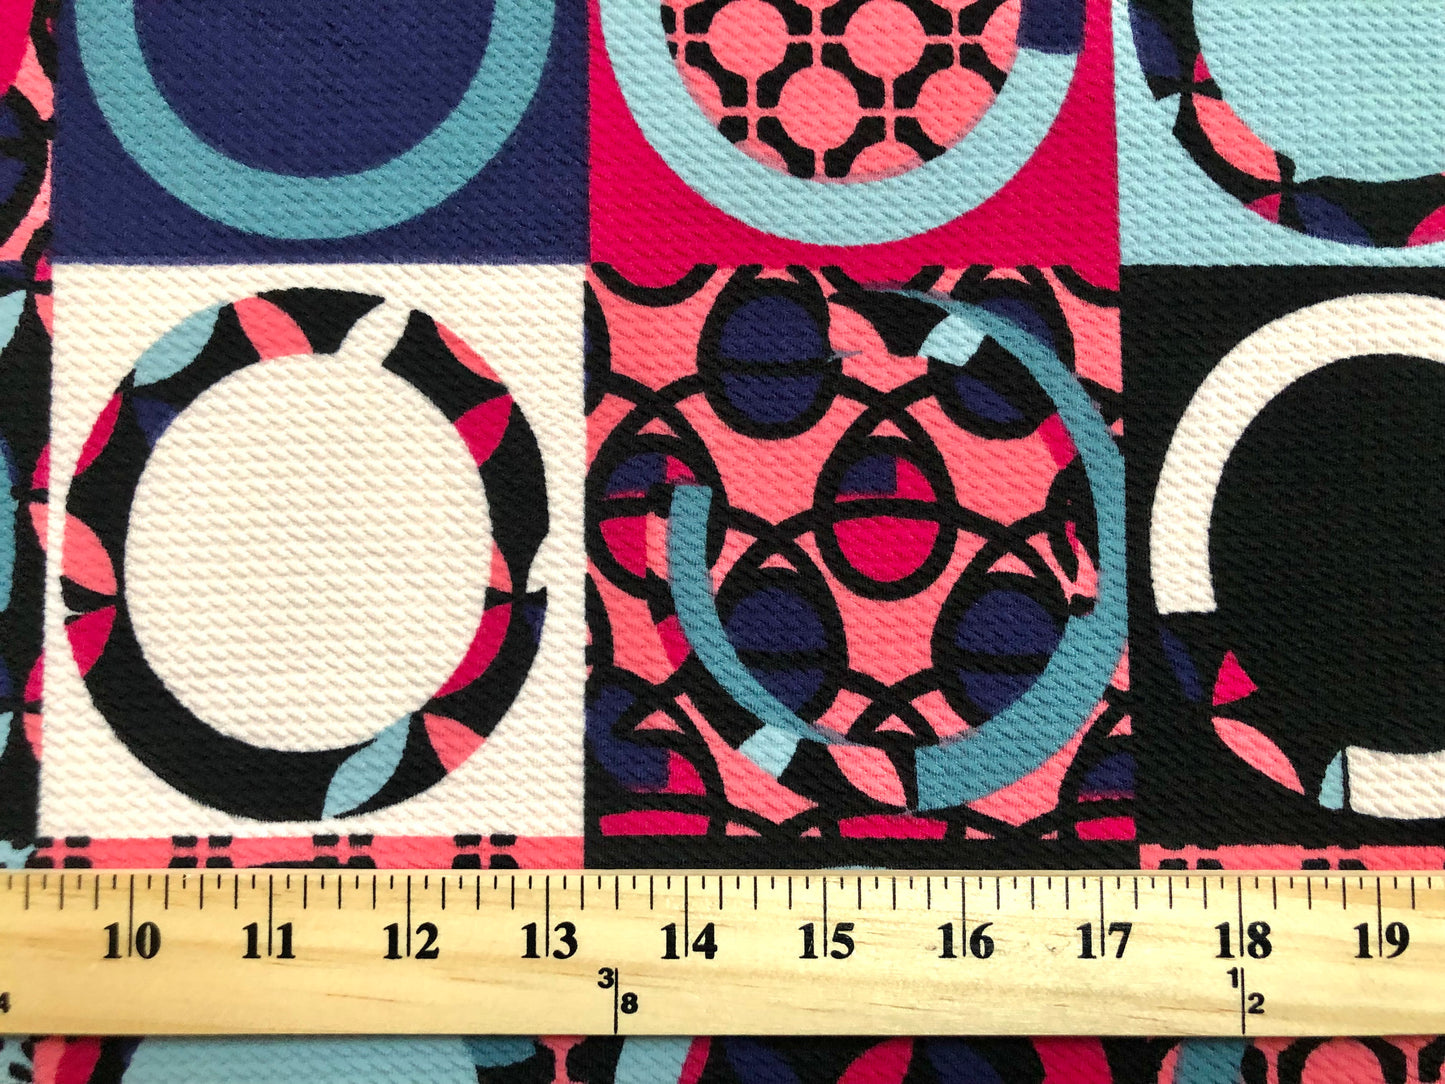 Bullet Knit Printed Fabric-Raspberry Purple Blue Black Geometric-BPR246-Sold by the Yard